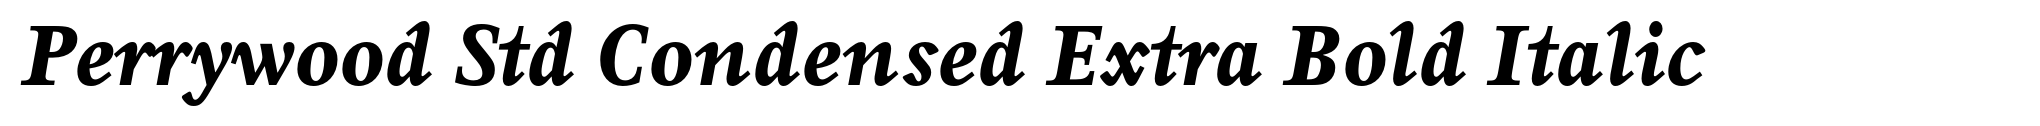 Perrywood Std Condensed Extra Bold Italic image